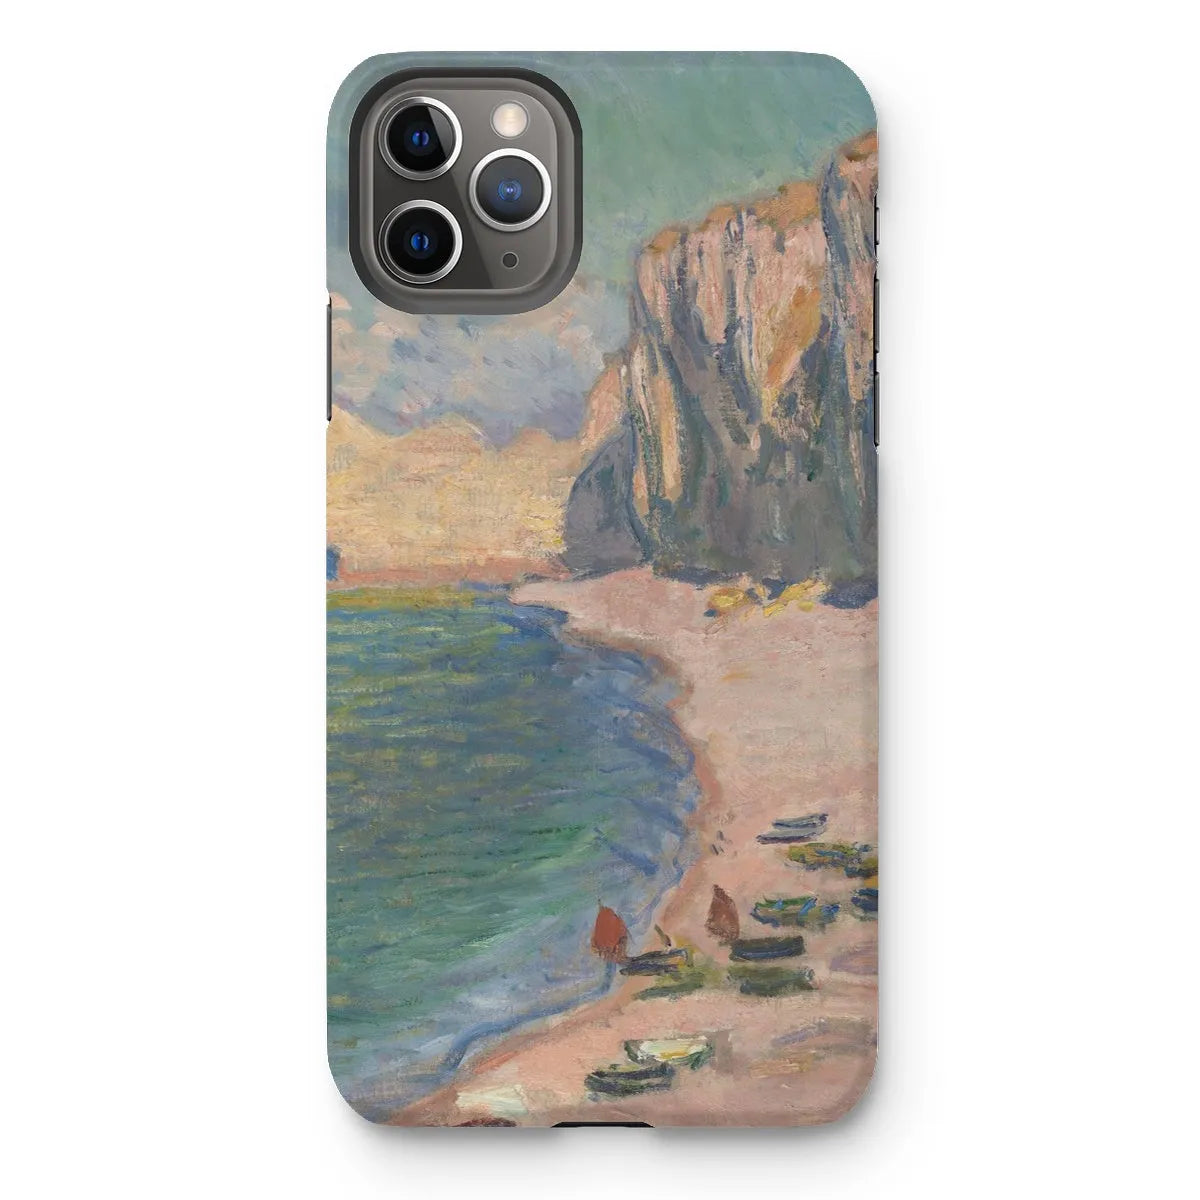 étretat - Impressionist Art Phone Case - Claude Monet - Iphone 11 Pro Max / Matte - Mobile Phone Cases - Aesthetic Art